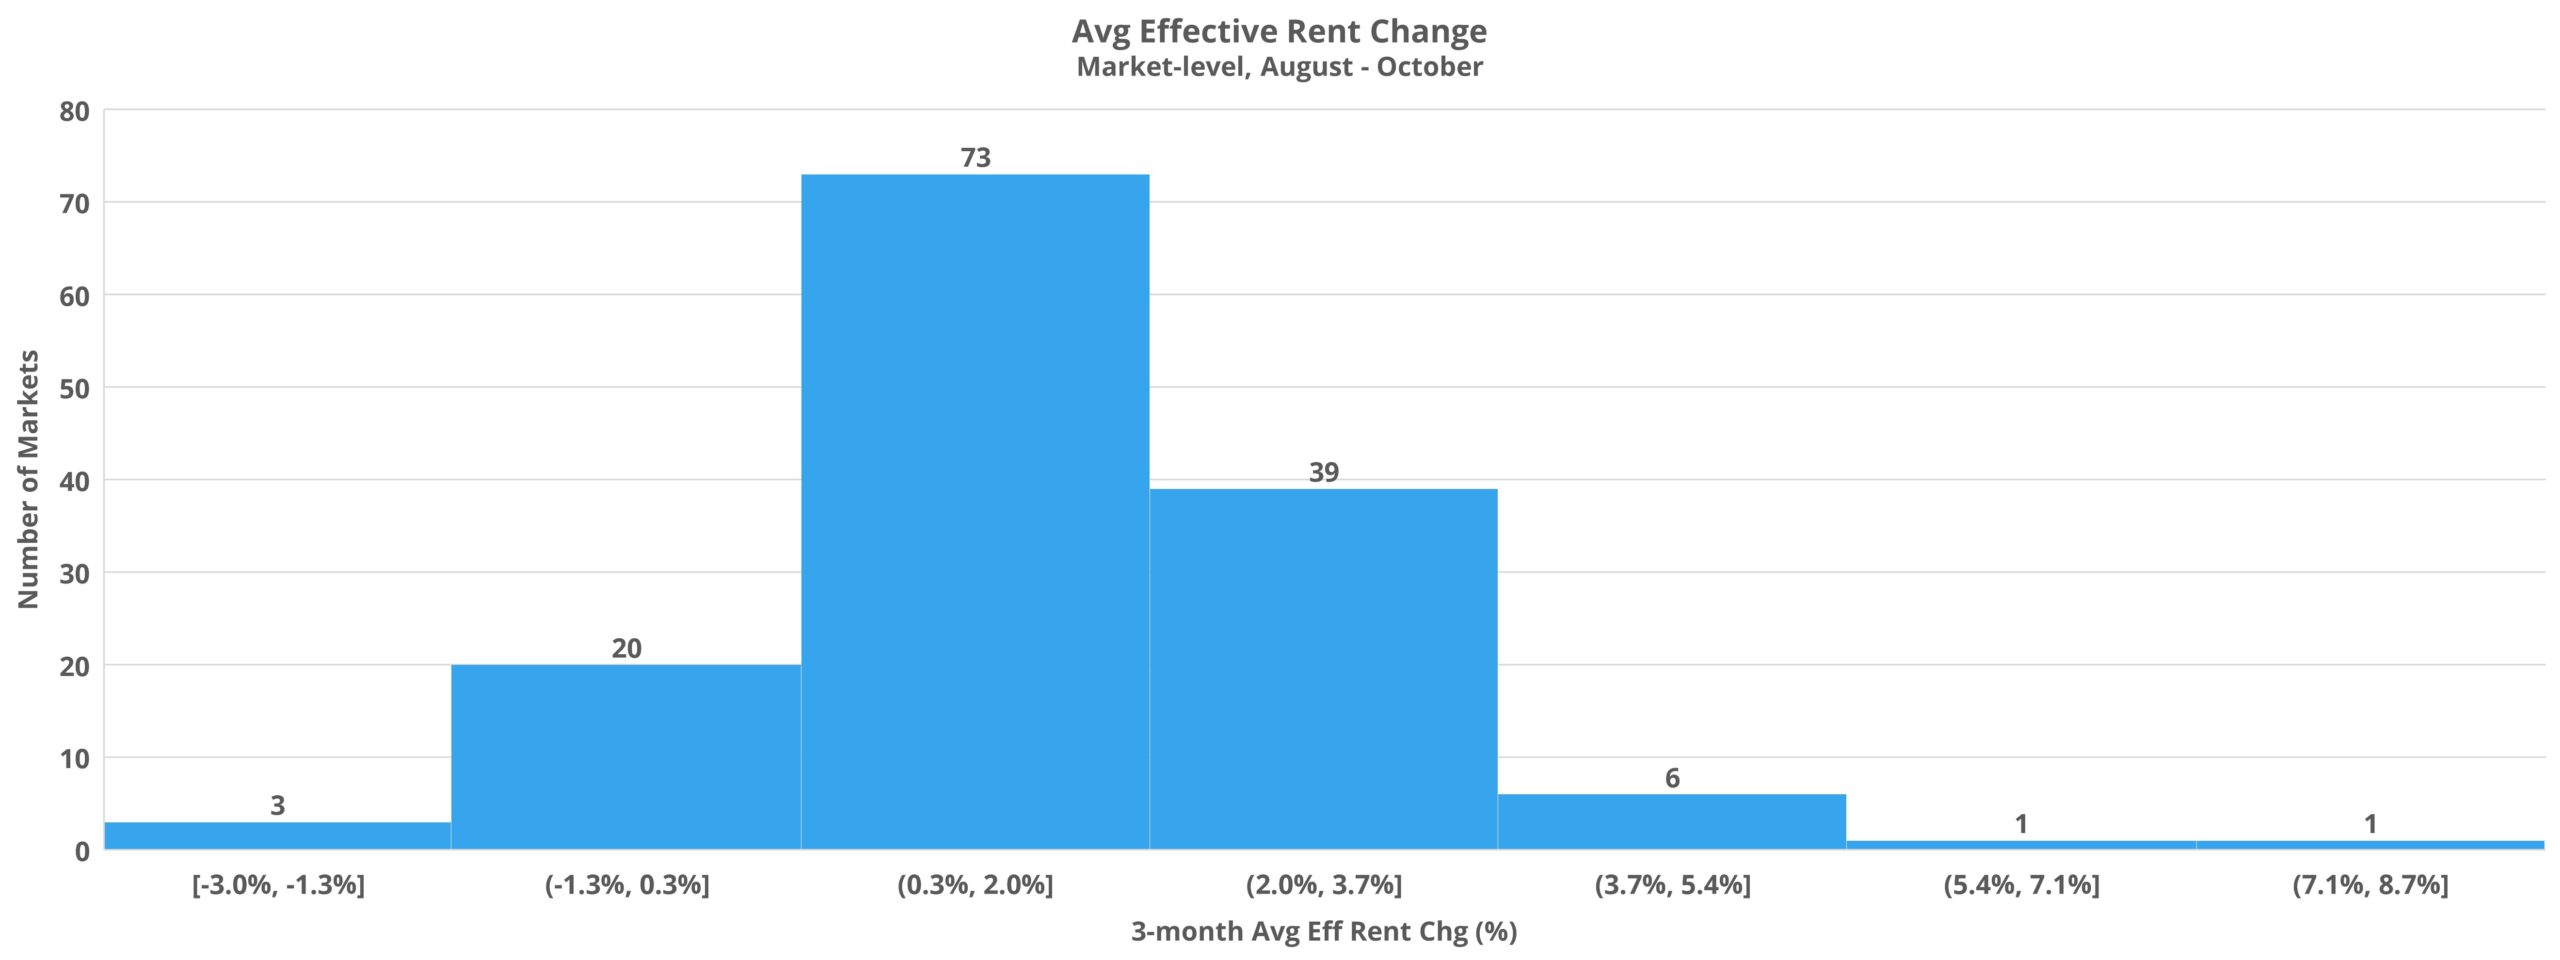 Avg Effective Rent Change